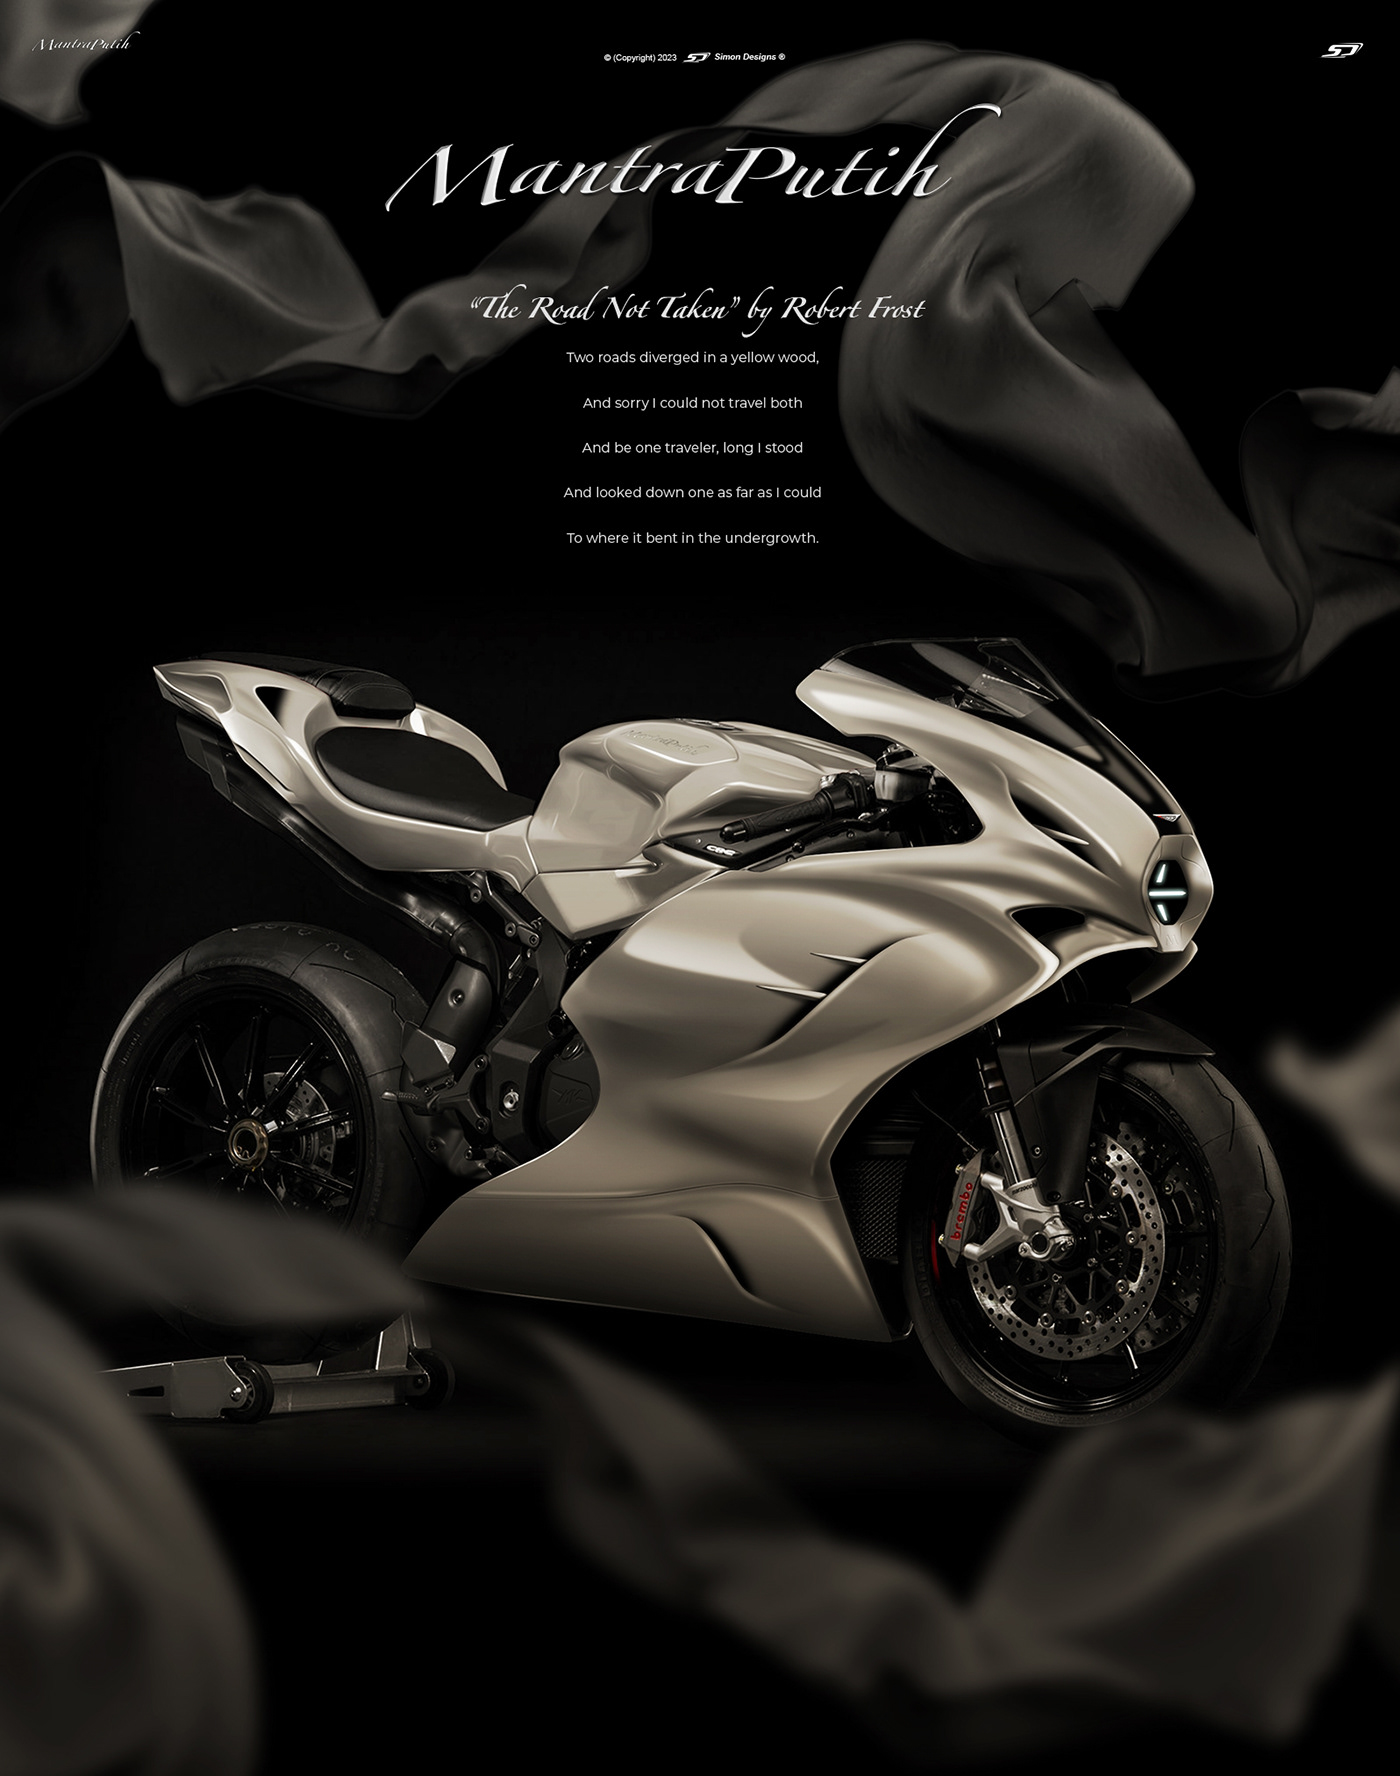 Simon Designs designer mv agusta motorcycle art motorcycle design Bodywork Custom Motorcycle mantra putih simon kustoms